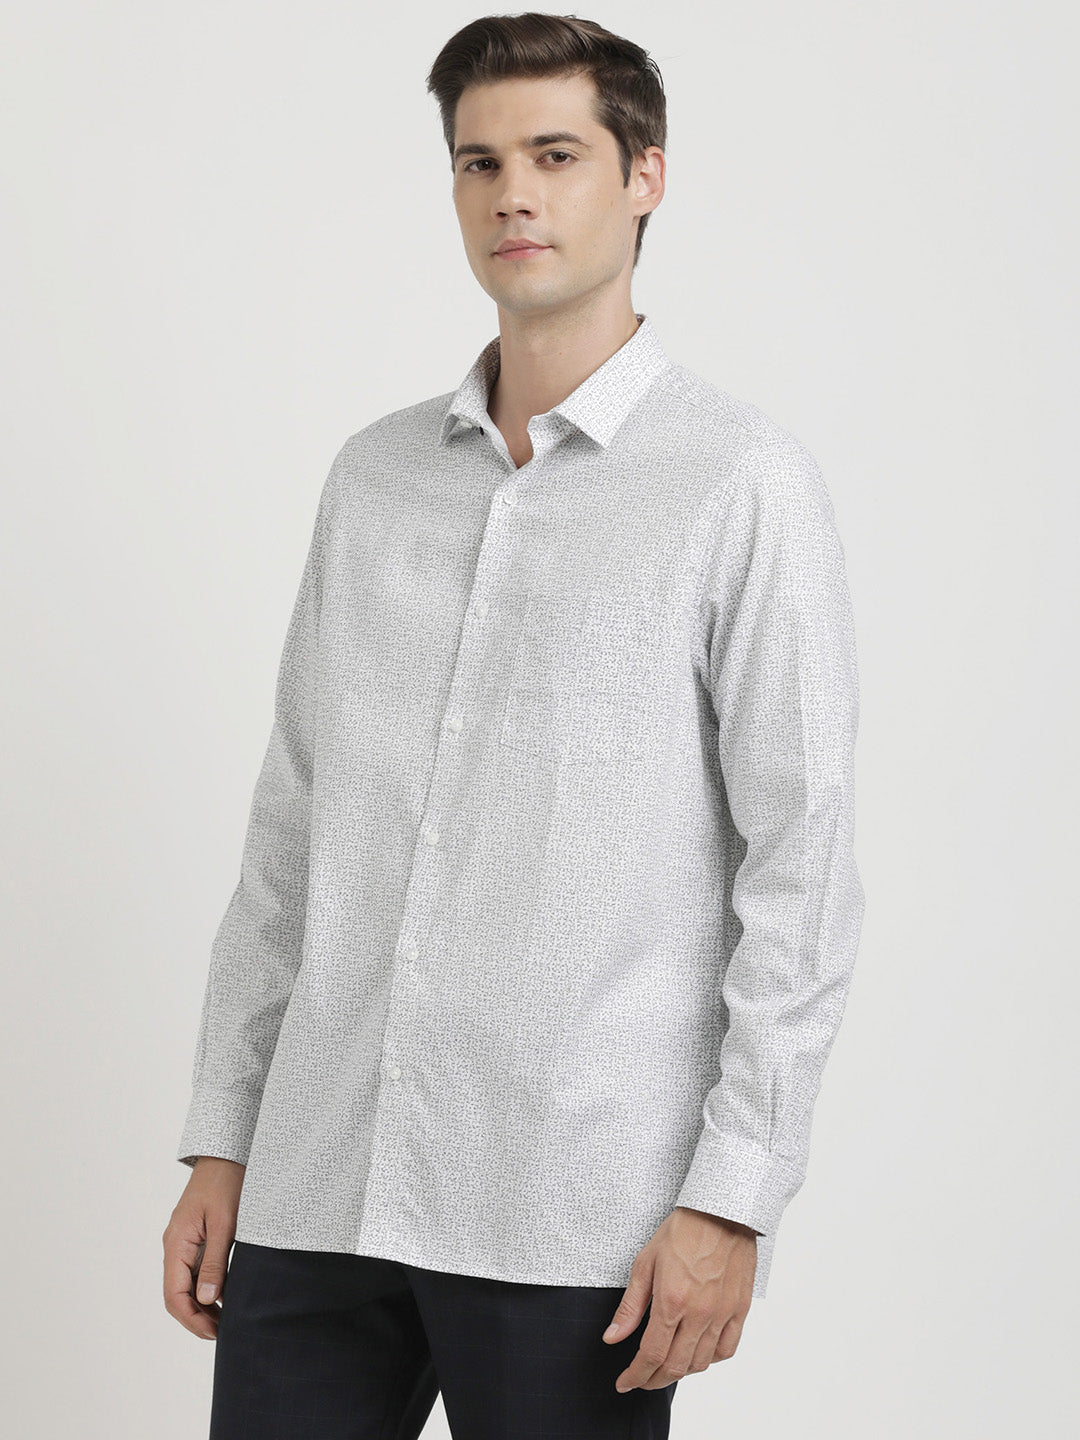 100% Cotton White Printed Regular Fit Full Sleeve Formal Shirt